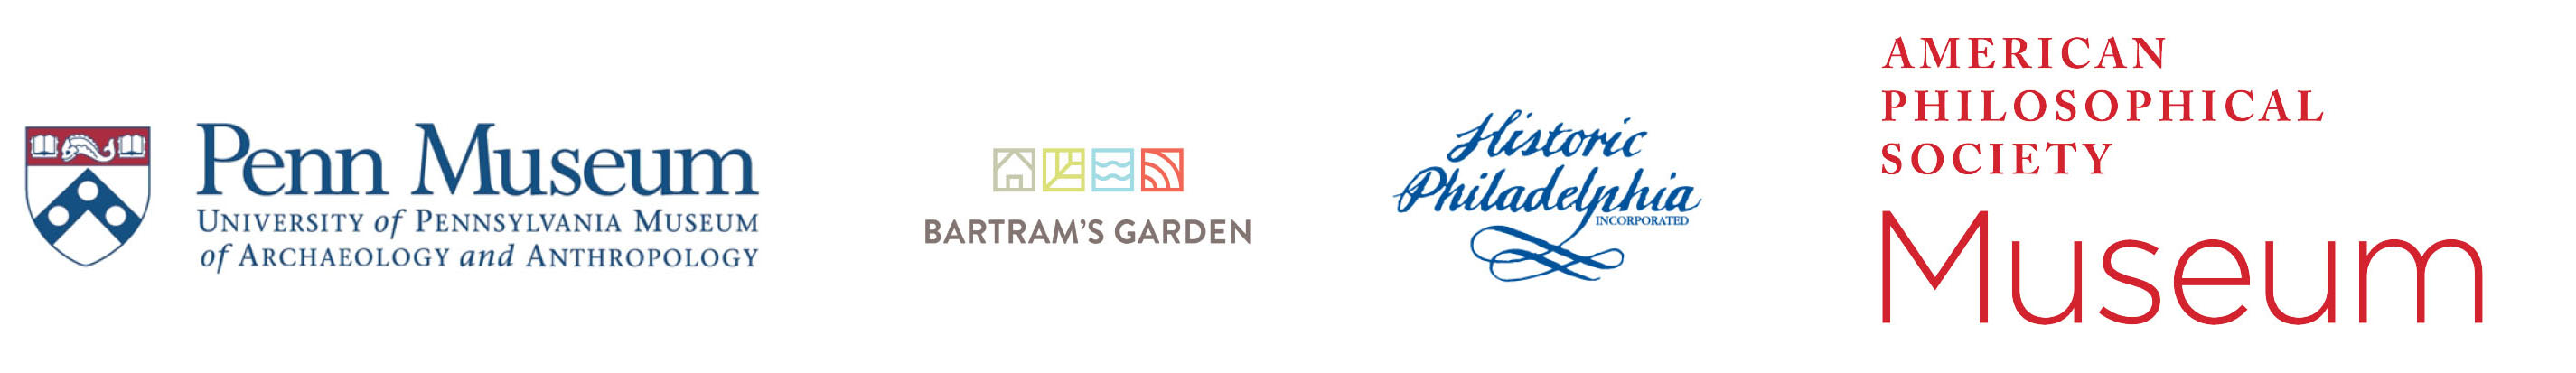 Penn Museum, Bartram's Garden, HPI, and APS Logos